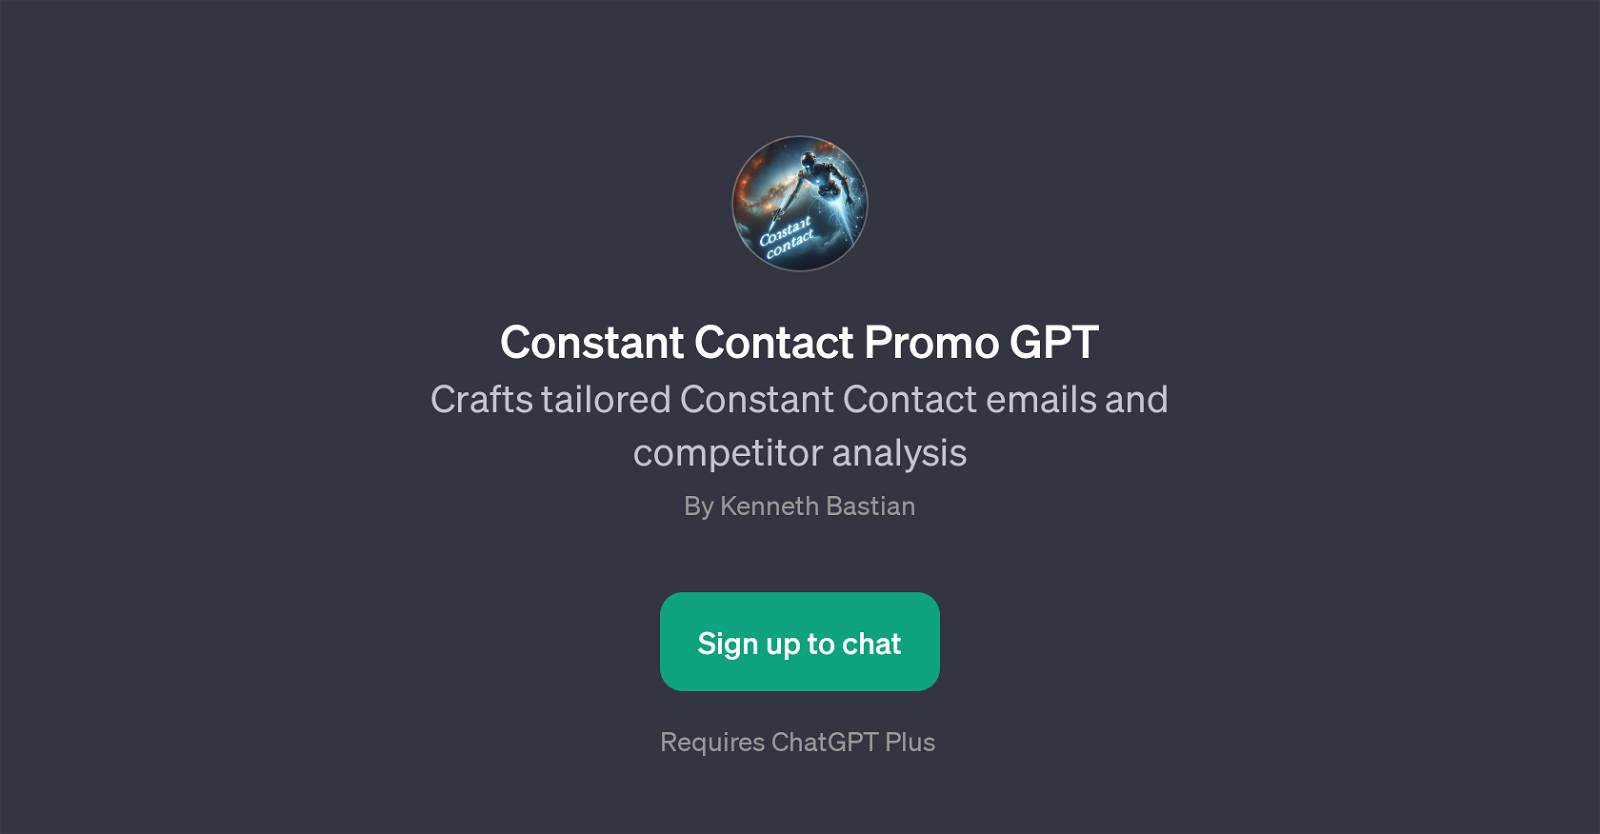 Constant Contact Promo GPT website